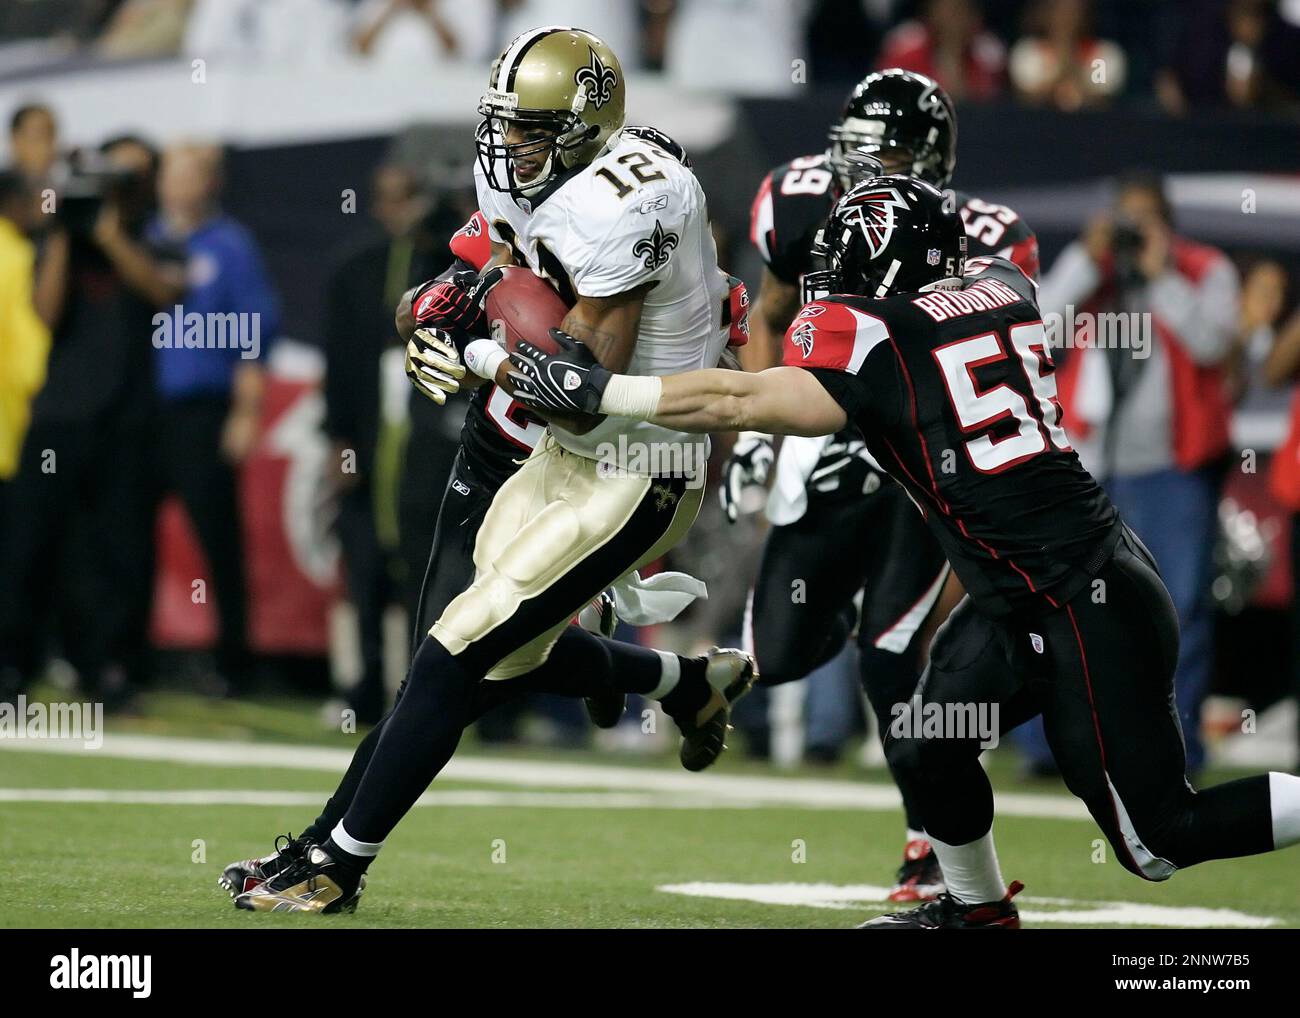 10 December 2007: New Orleans Saints wide receiver Marques Colston